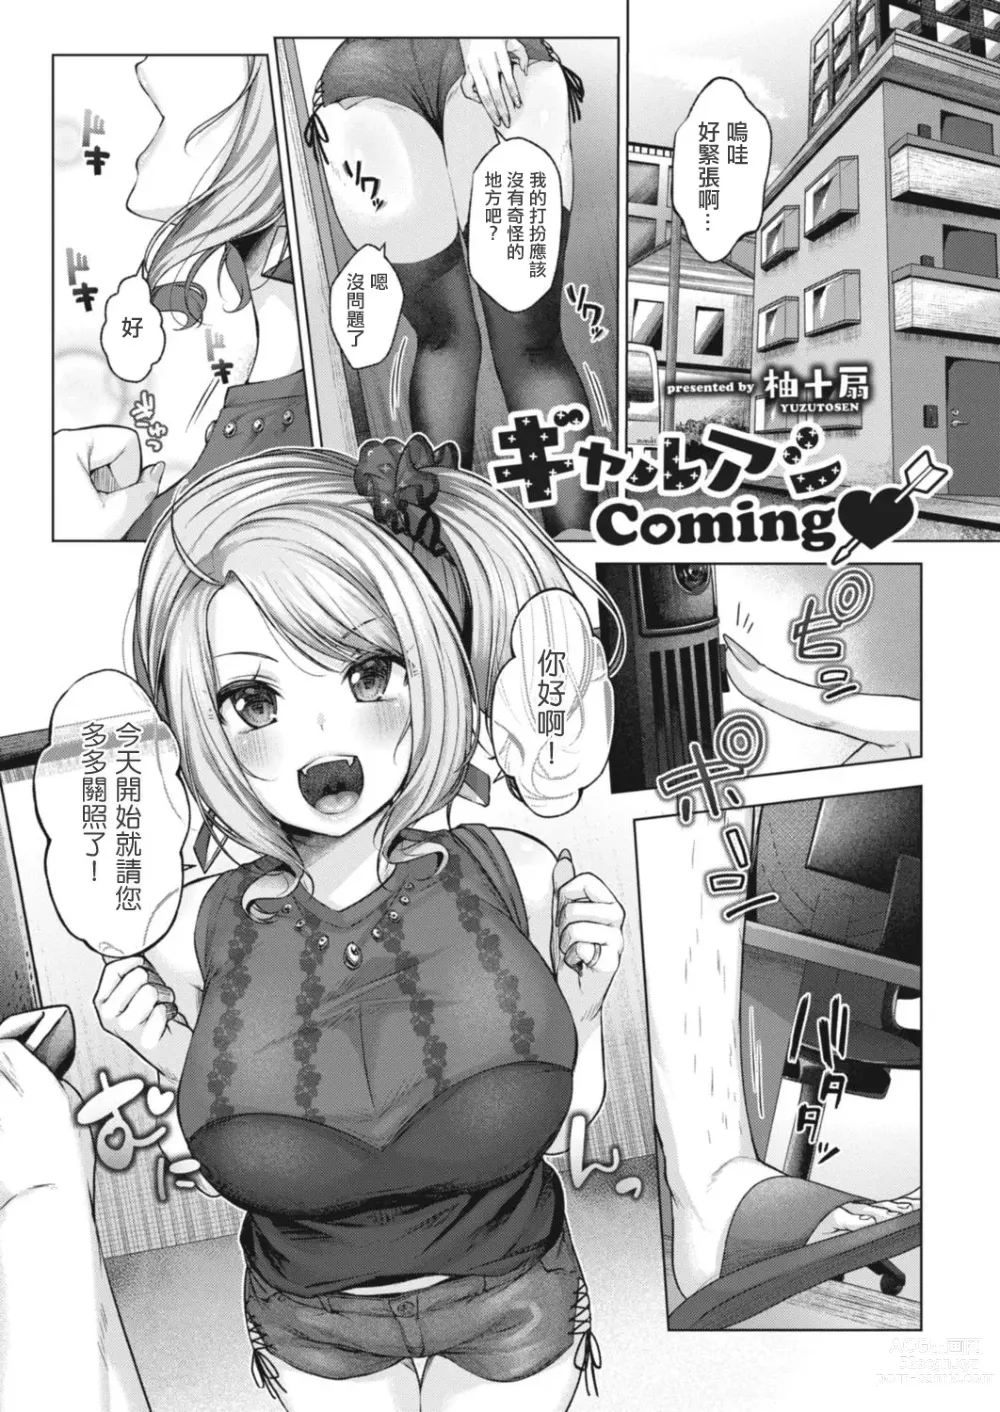 Page 1 of manga Gal Assi Coming